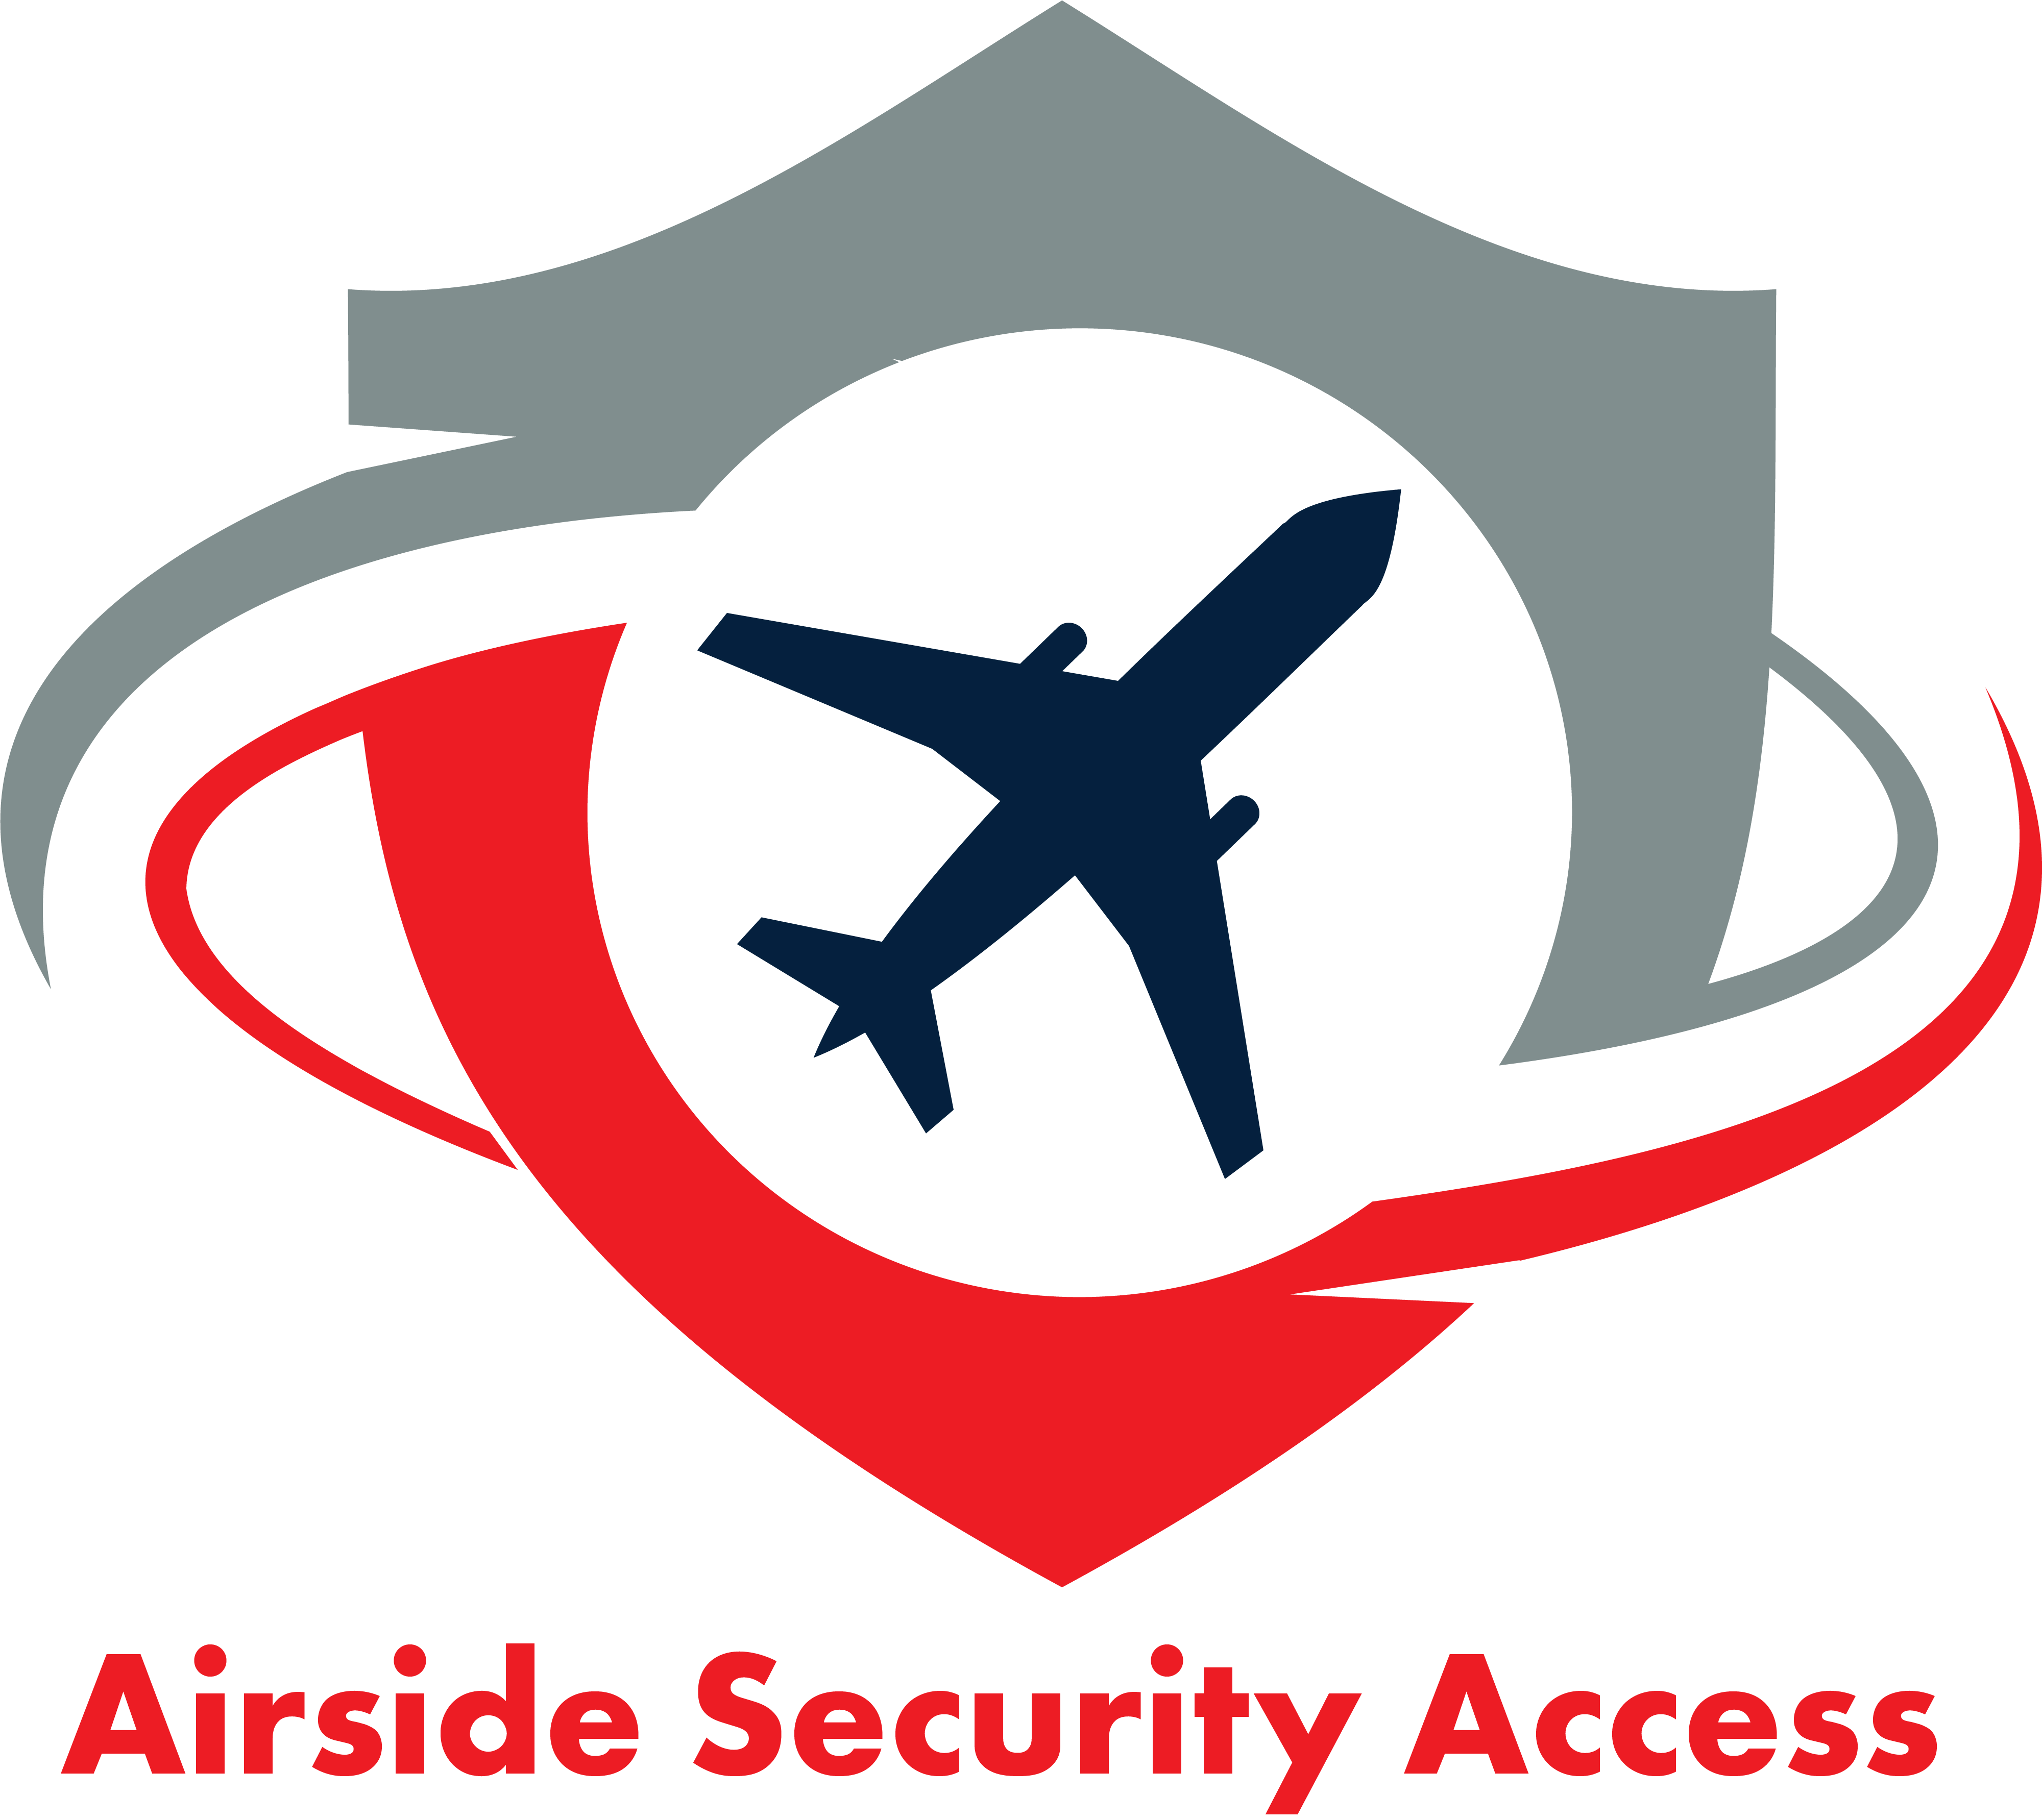 Airside Security Access (ASA)